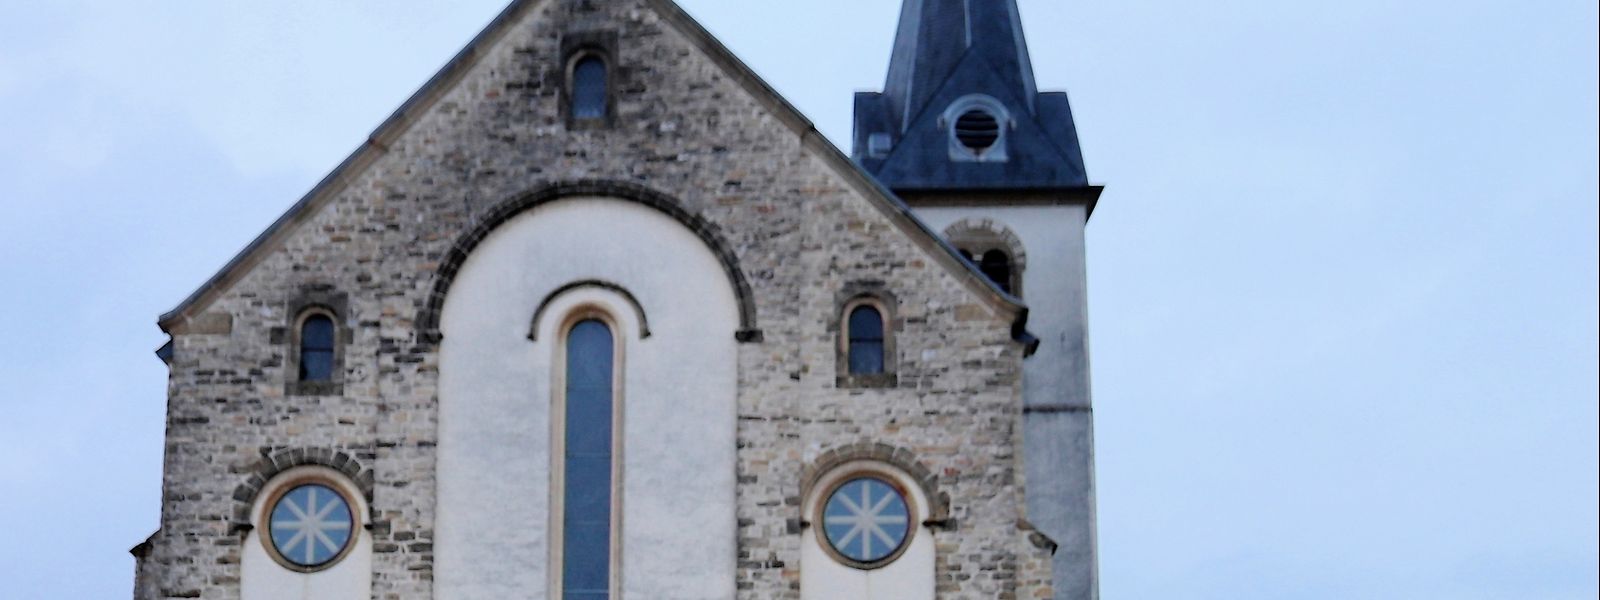 Die Kirche in Aspelt wird revitalisiert.